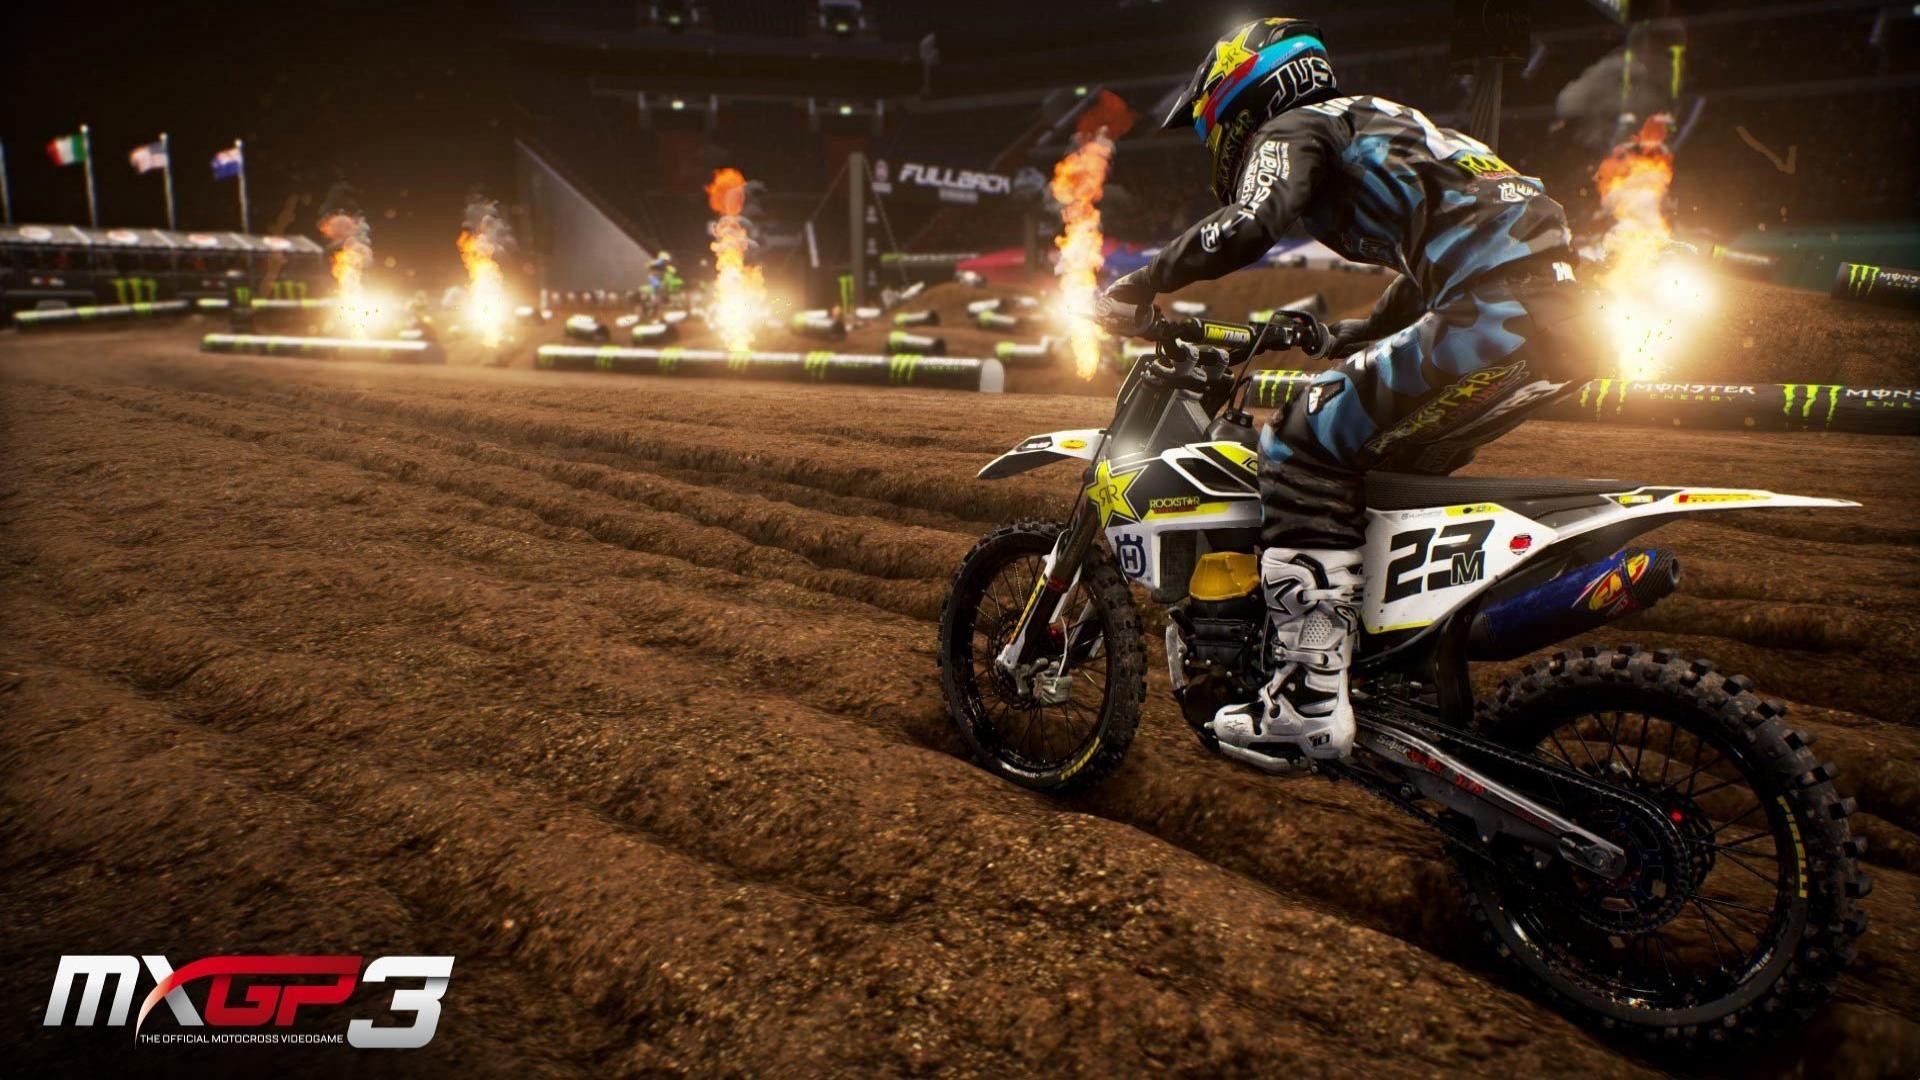 Motocross videogame. MXGP 3. Mxgp3 - the Official Motocross videogame. MXGP 3 Nintendo Switch. Мотокросс гонки.